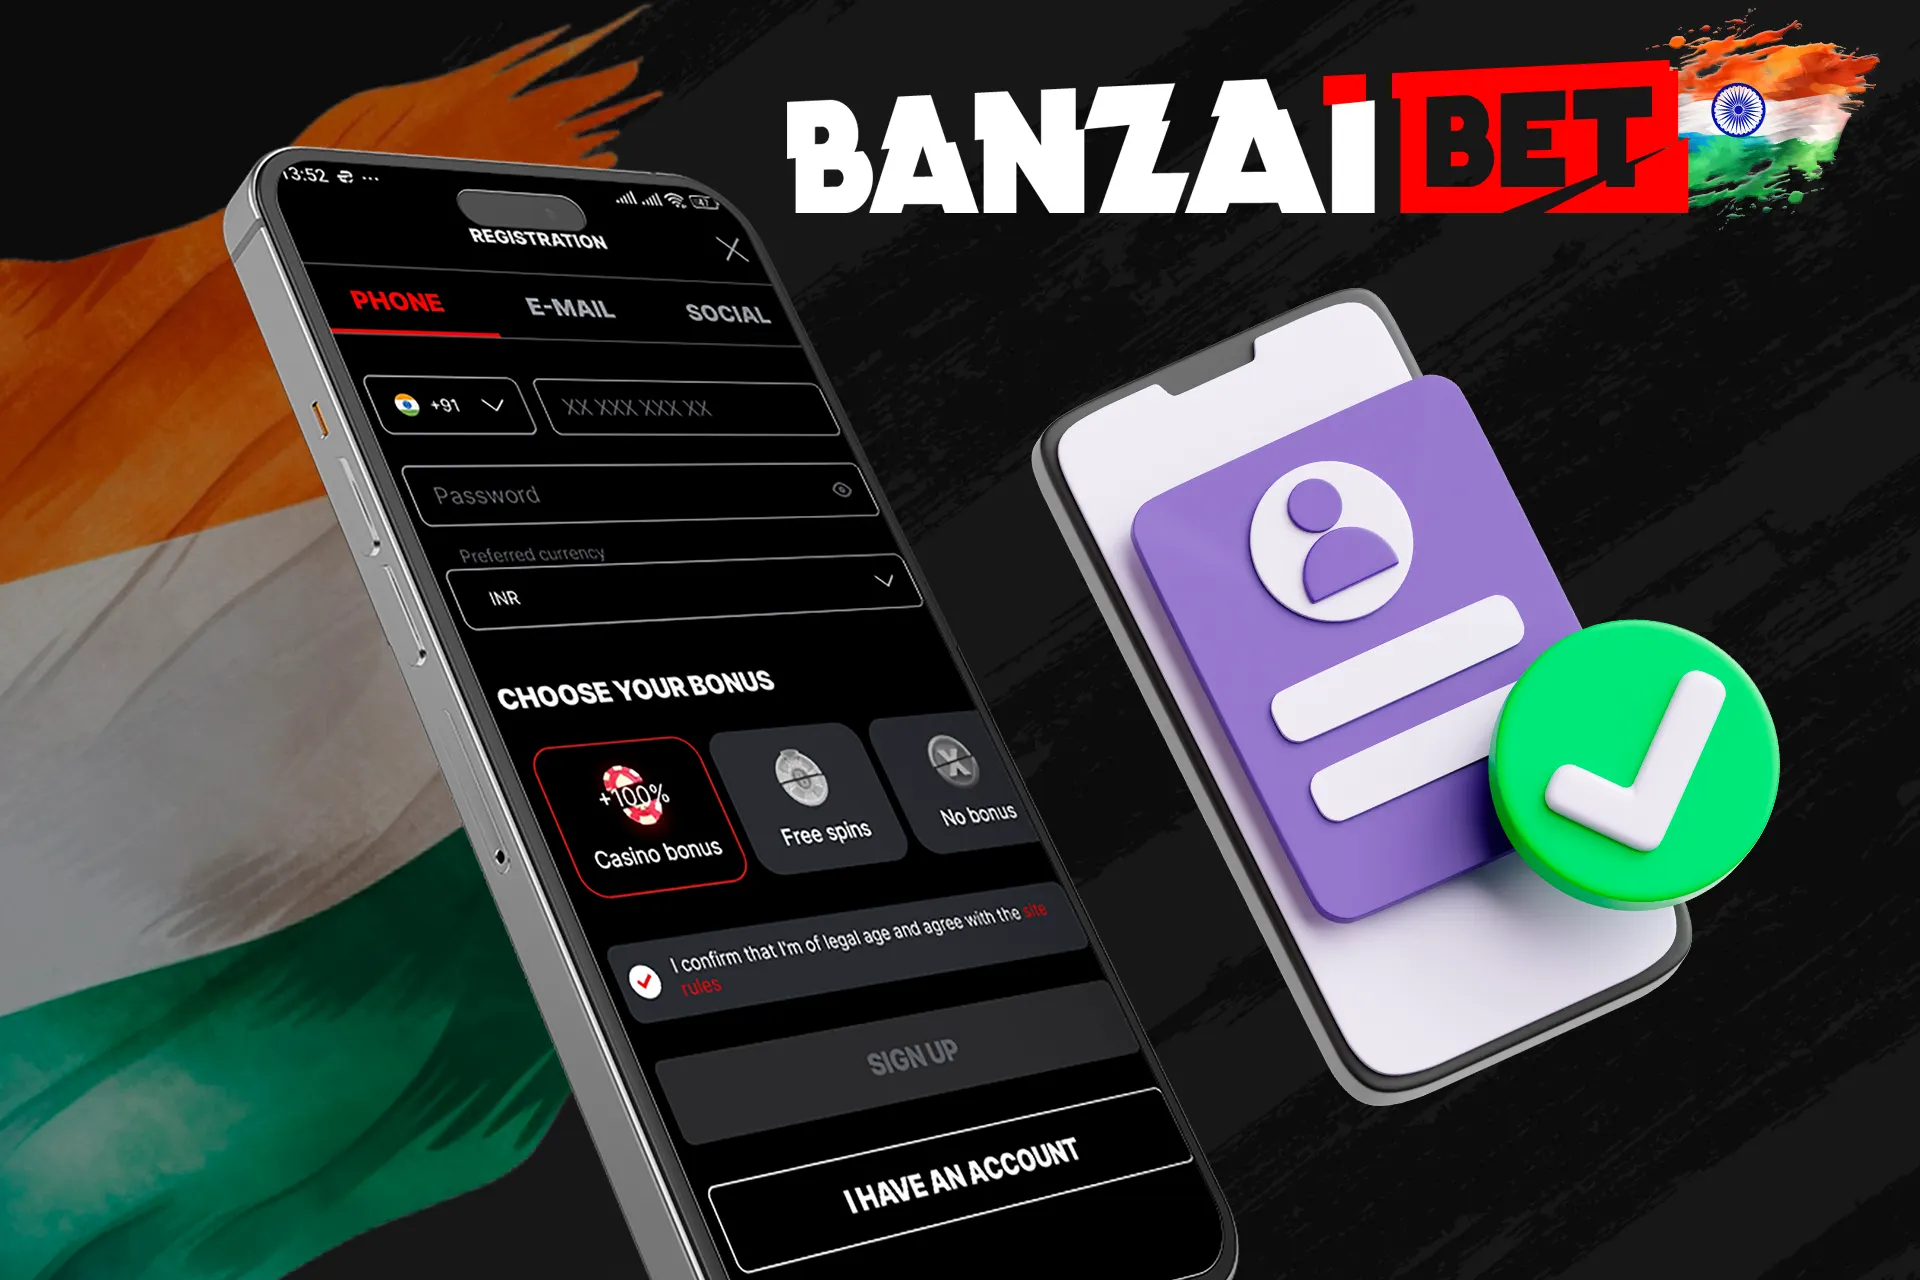 Easy registration process using Banzaibet India mobile app